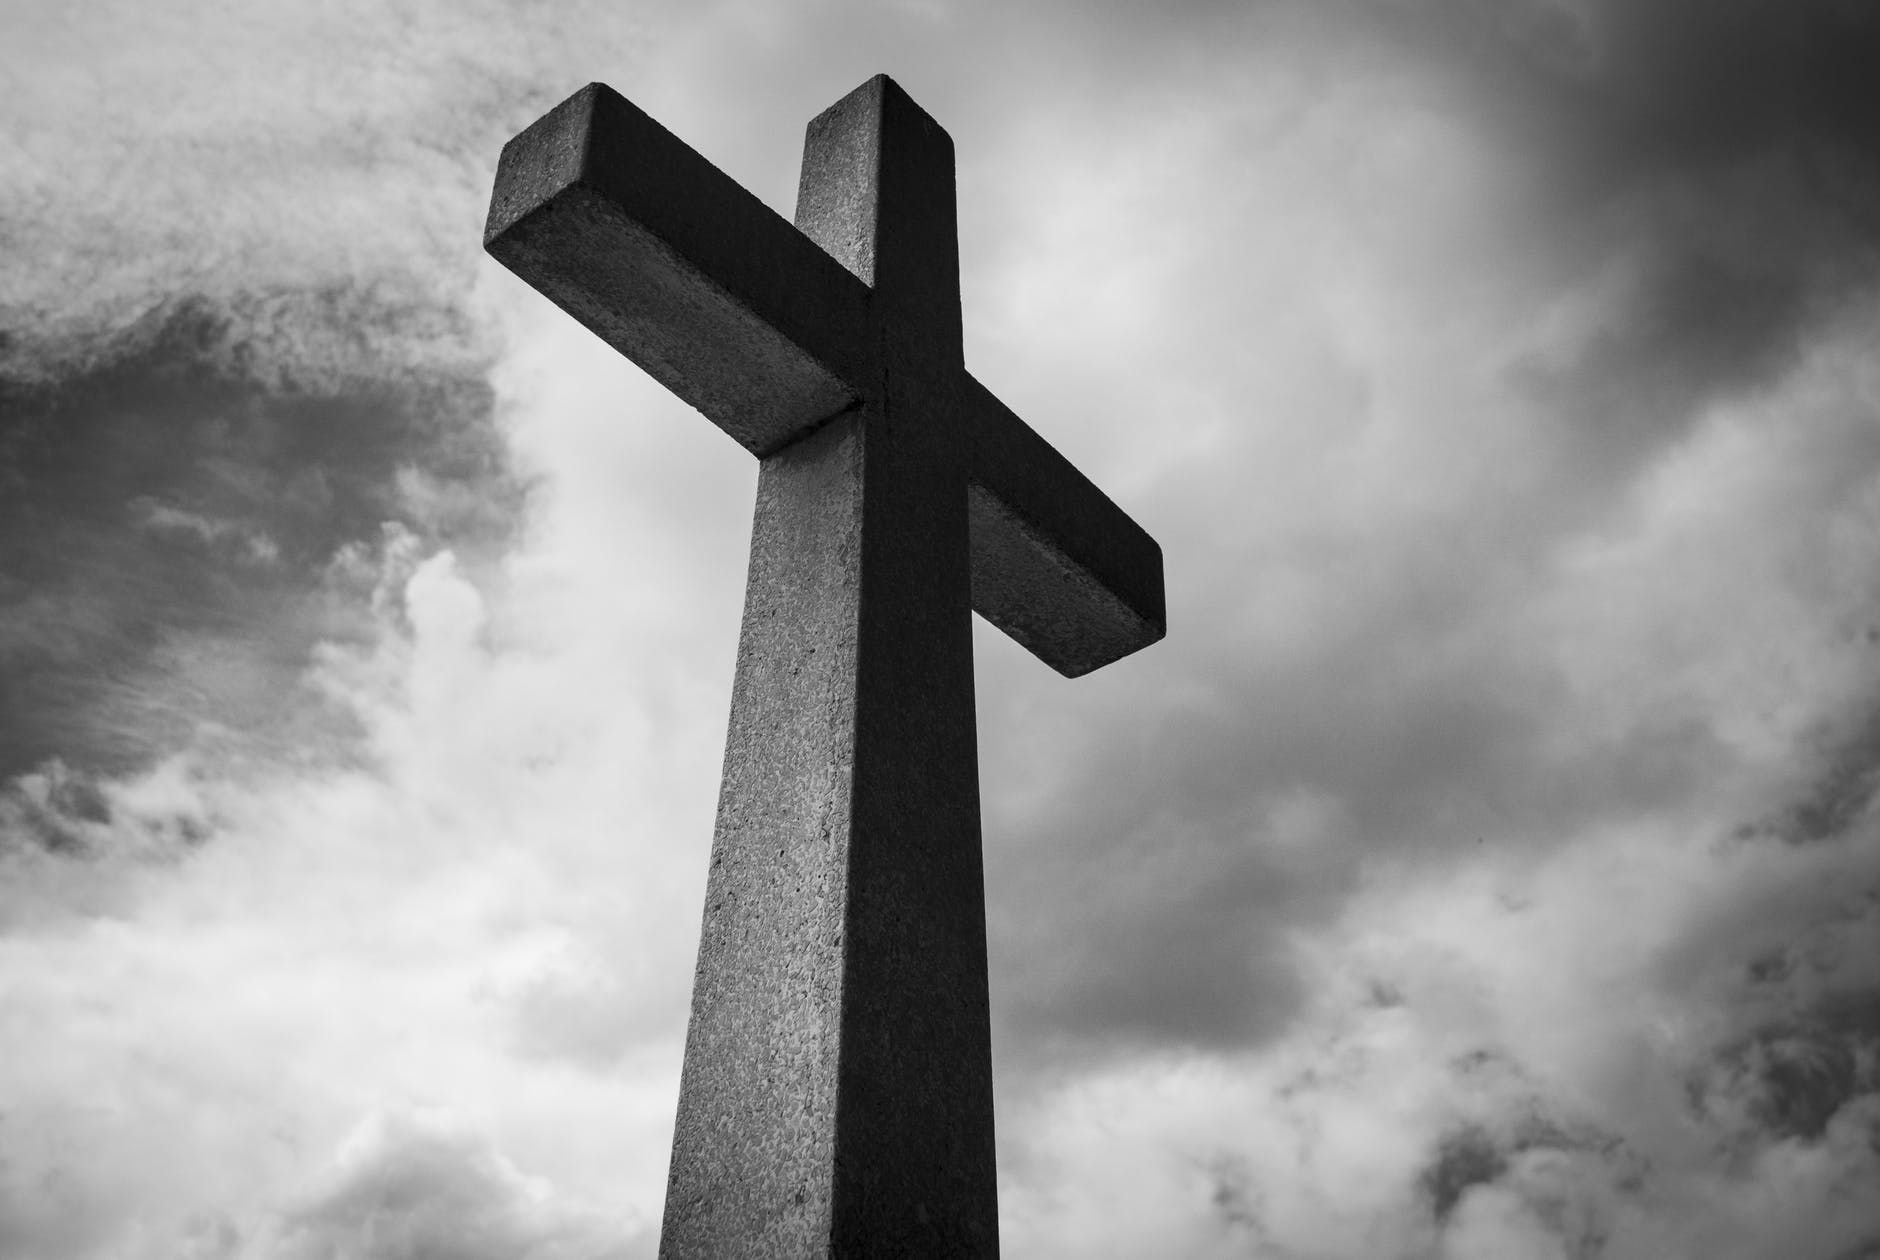 #JamesDonaldson On #MentalHealth – #Religious Identity May Impact #SuicideRisk